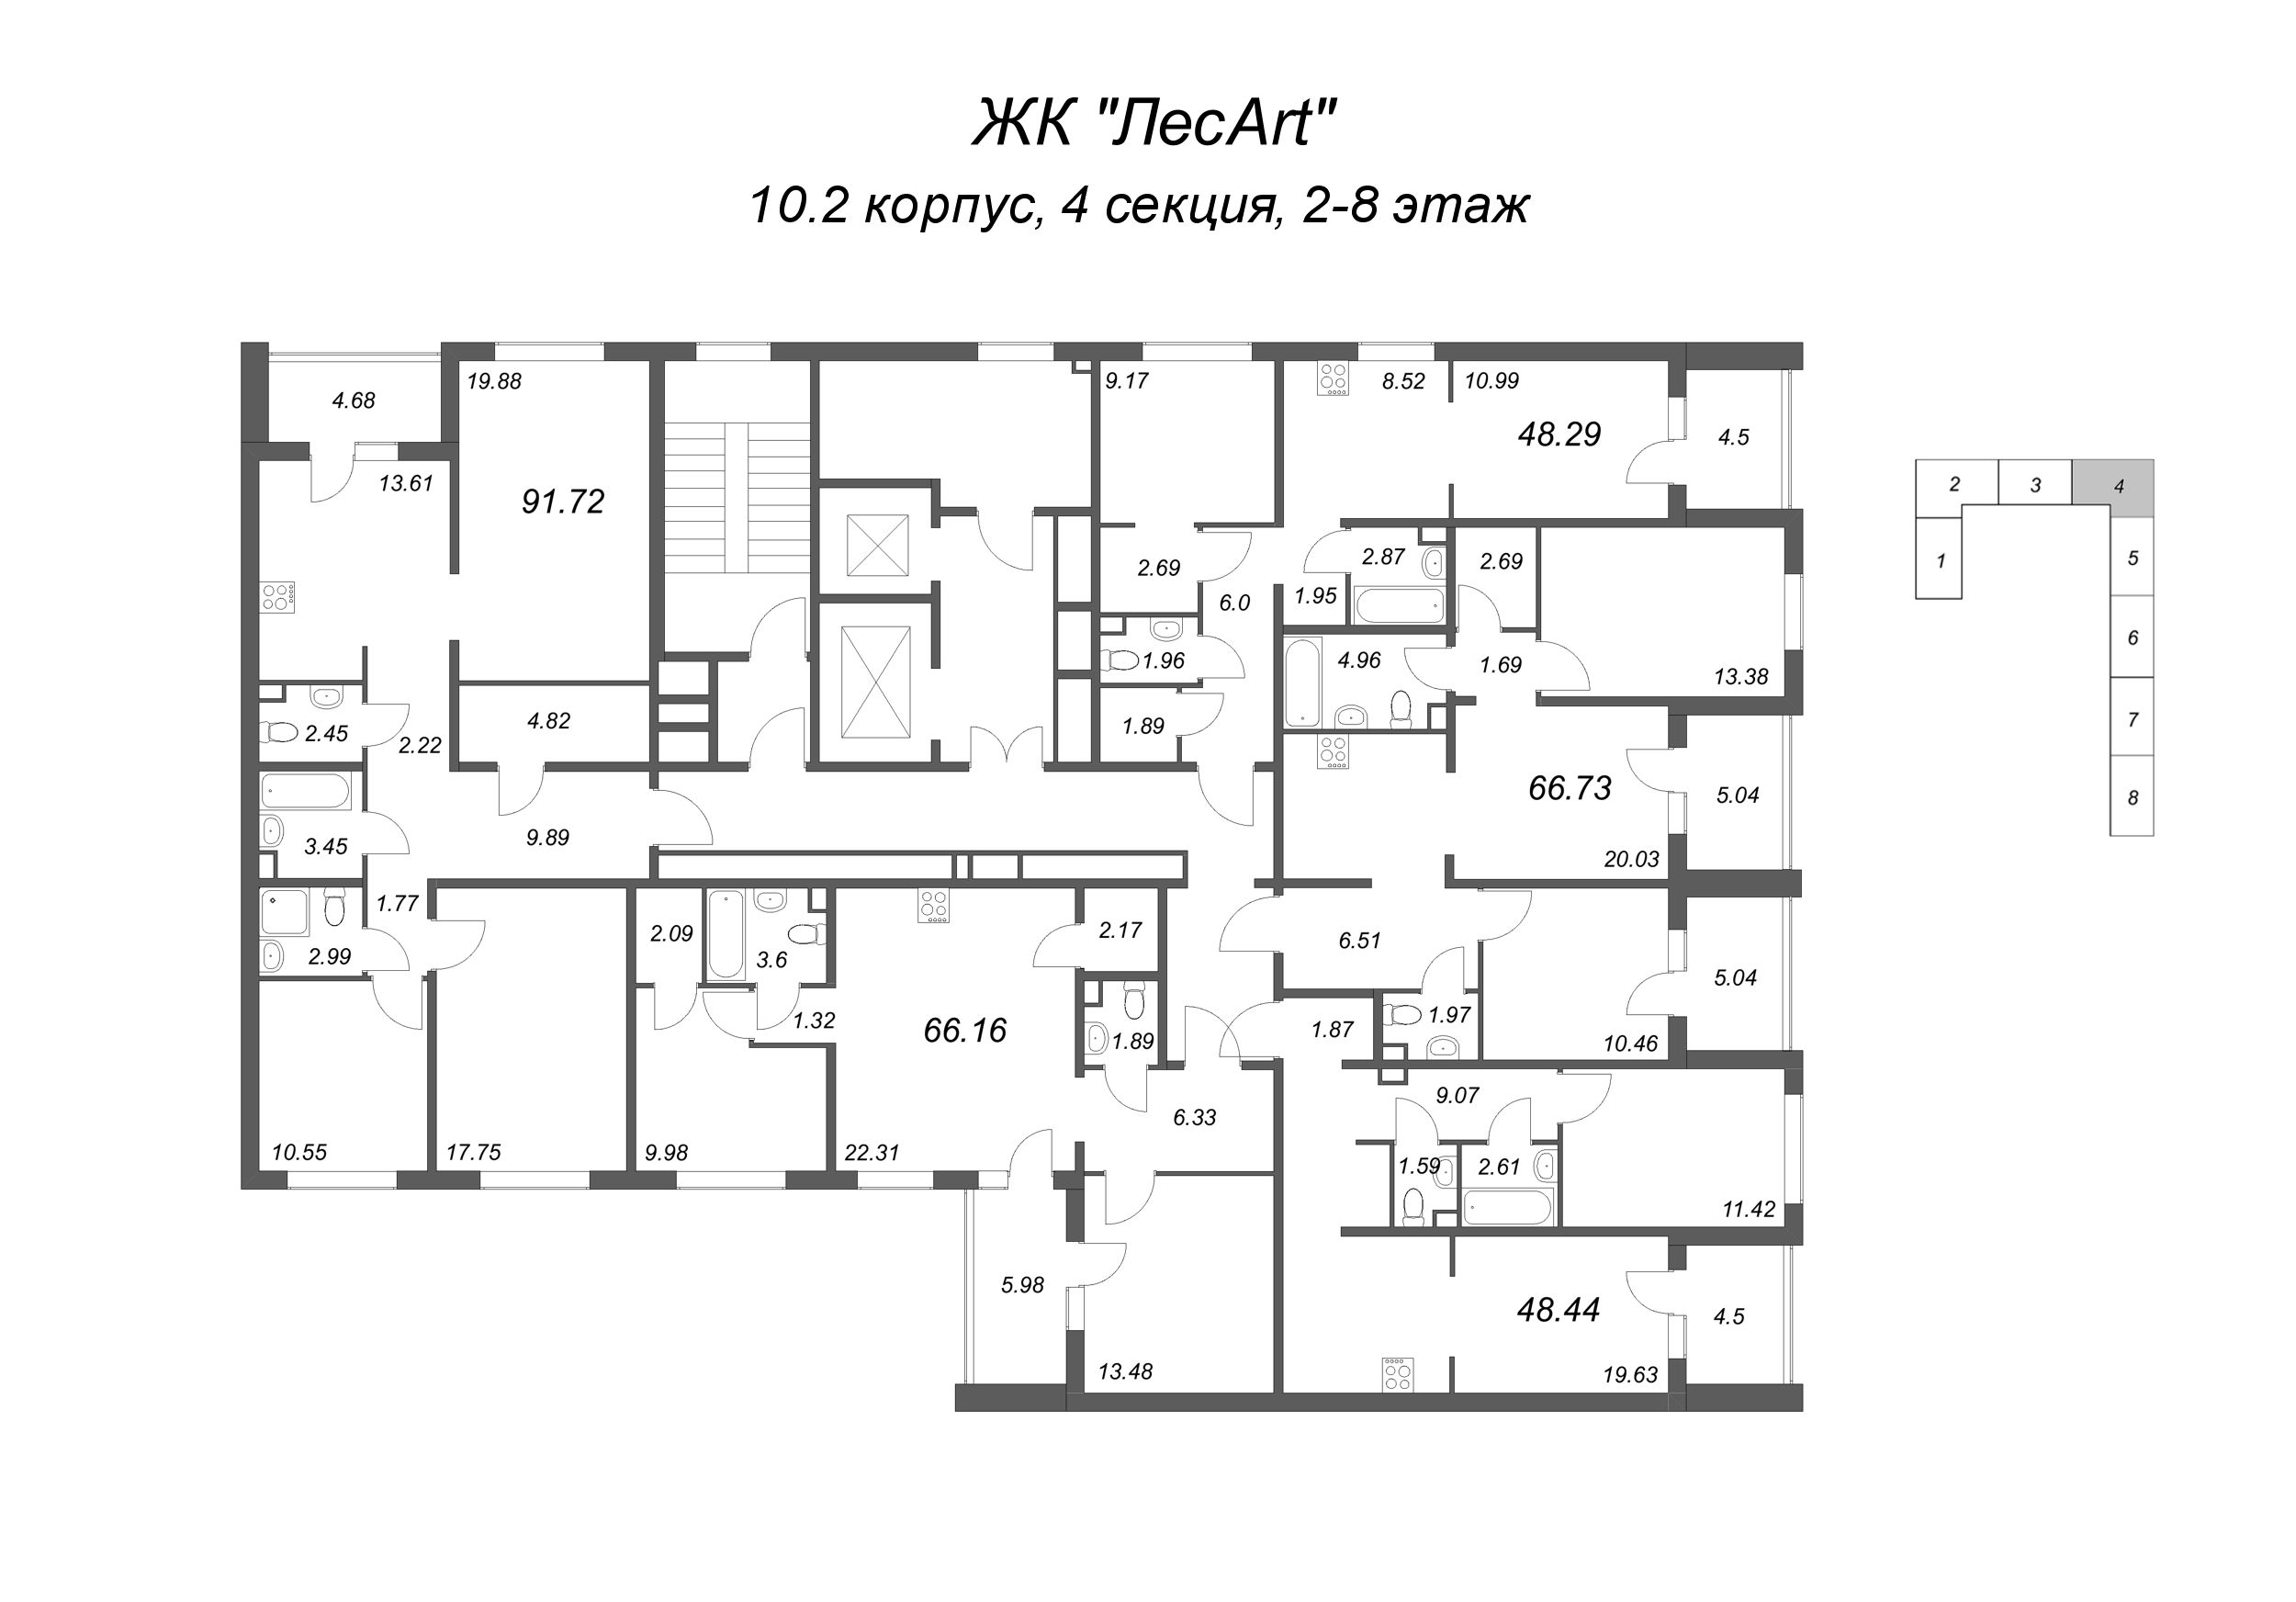 3-комнатная (Евро) квартира, 66.16 м² - планировка этажа